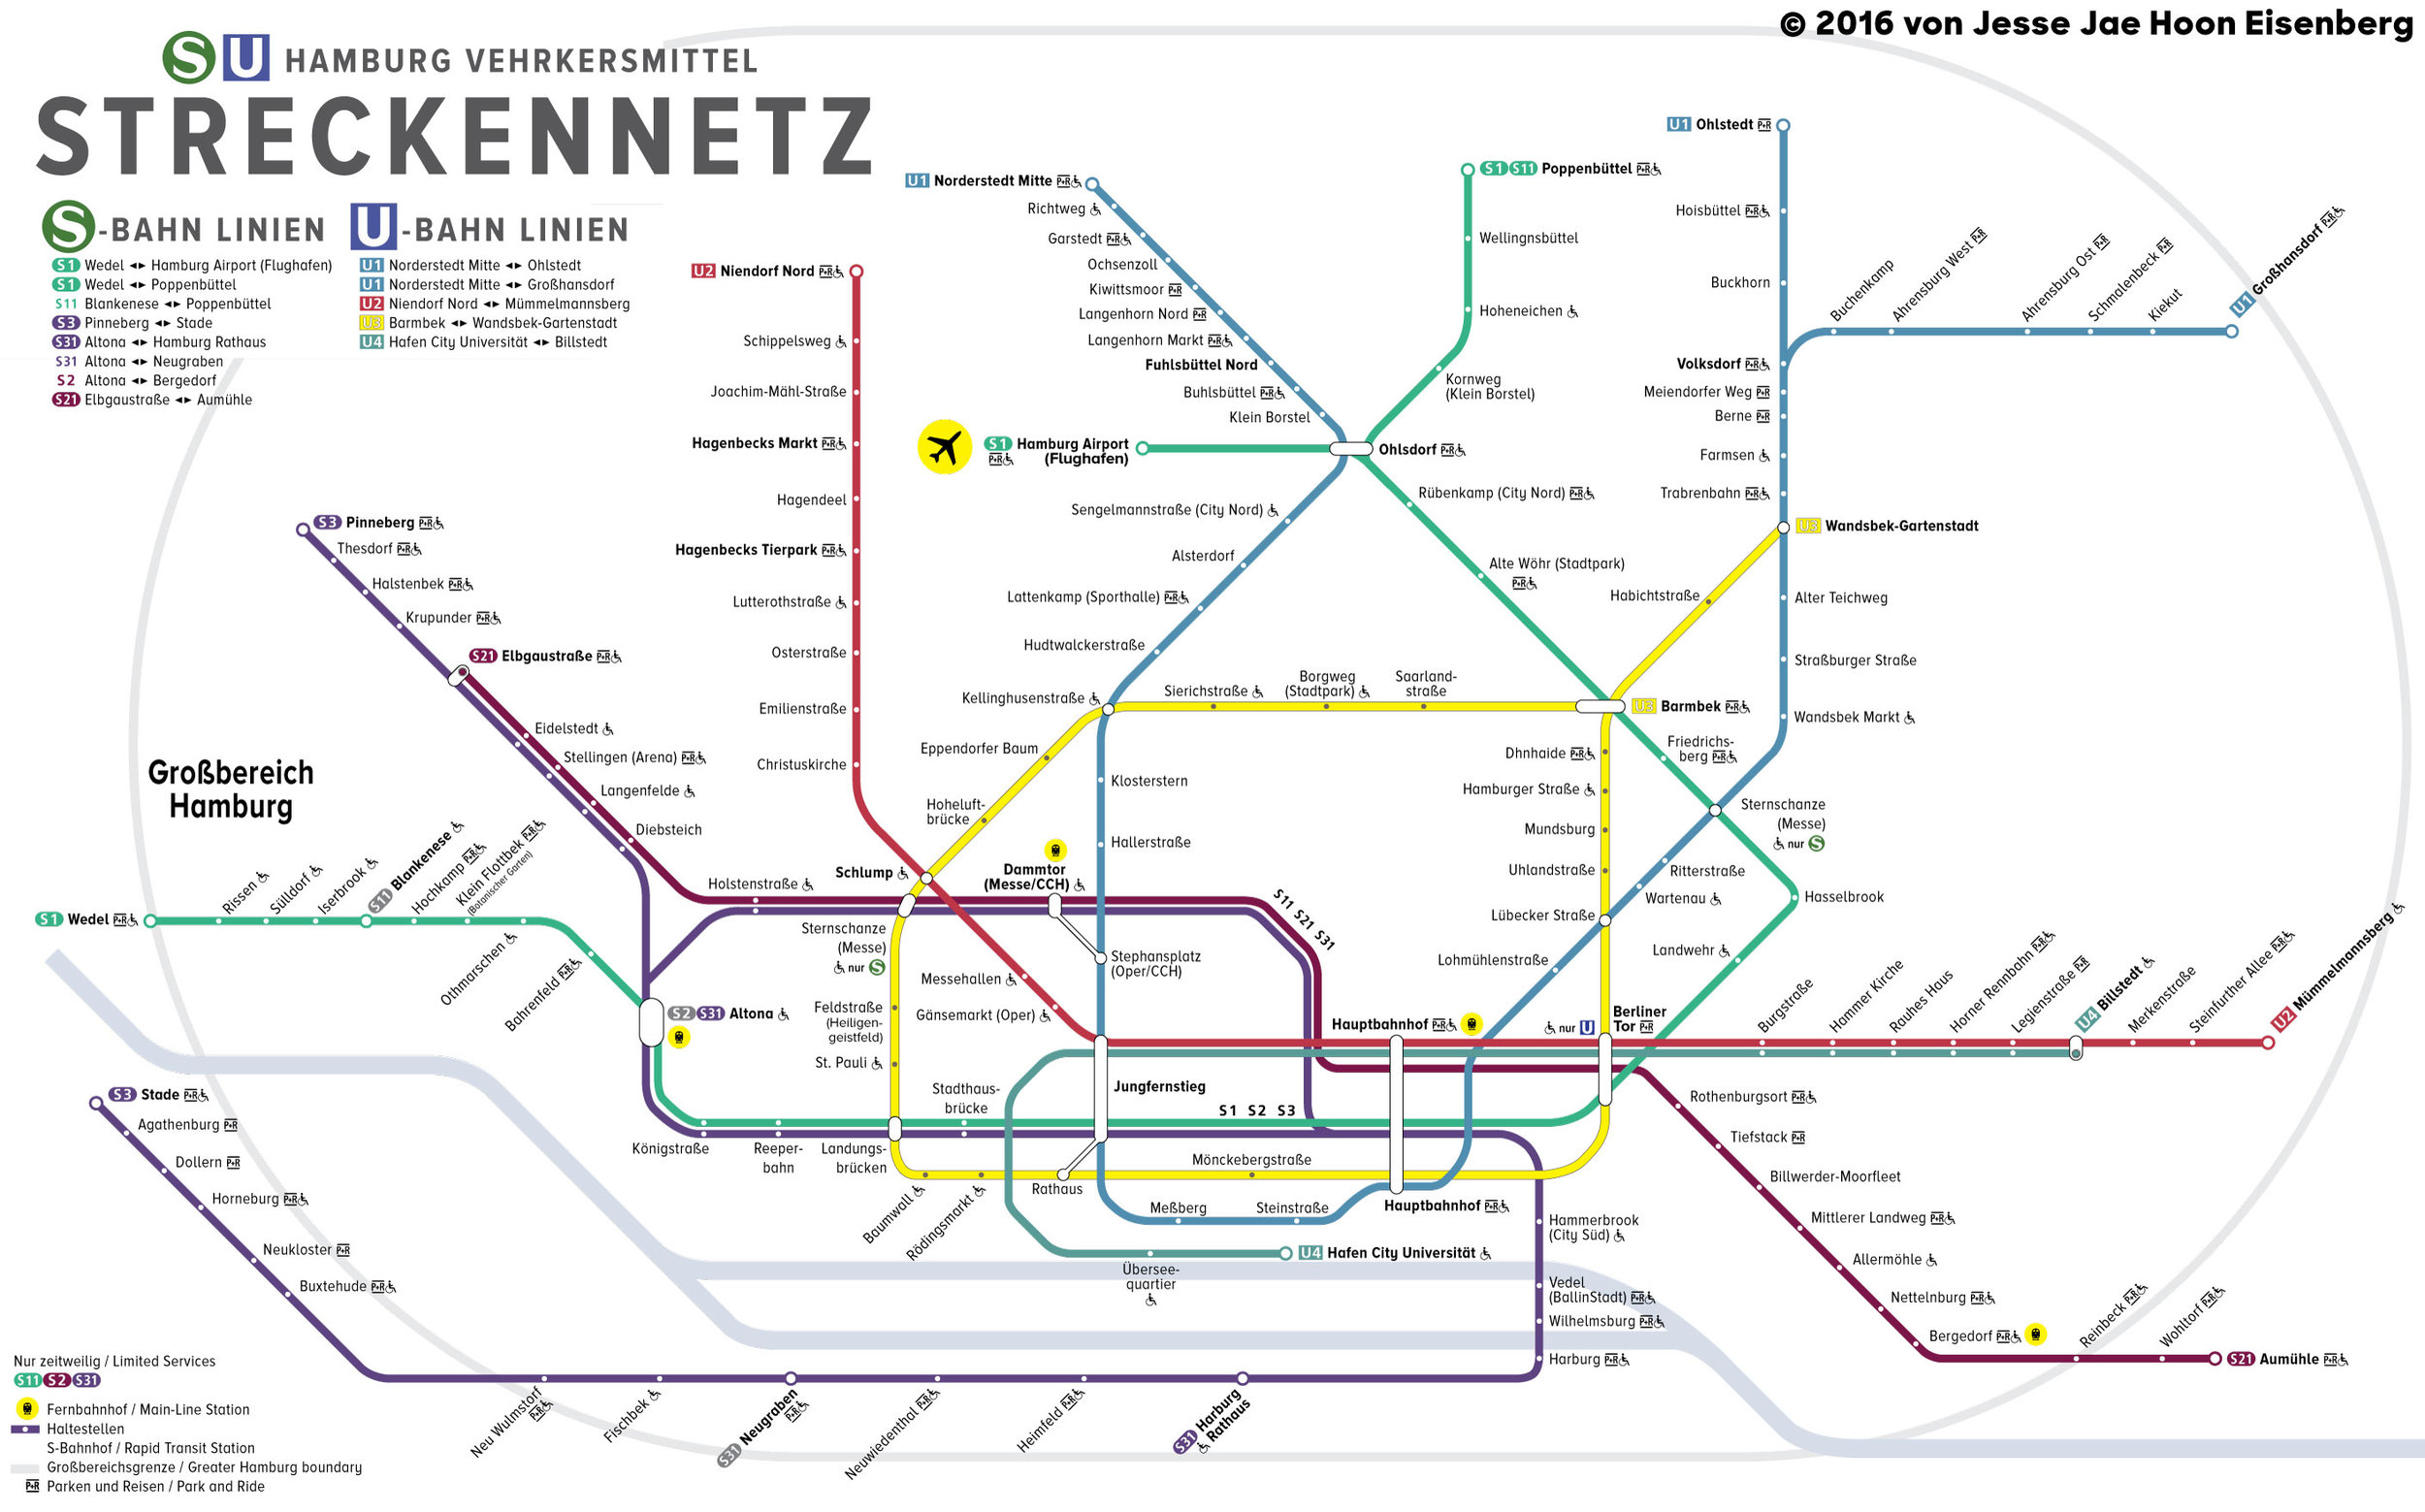 Recreation of the Hamburg S-Bahn/U-Bahn Map